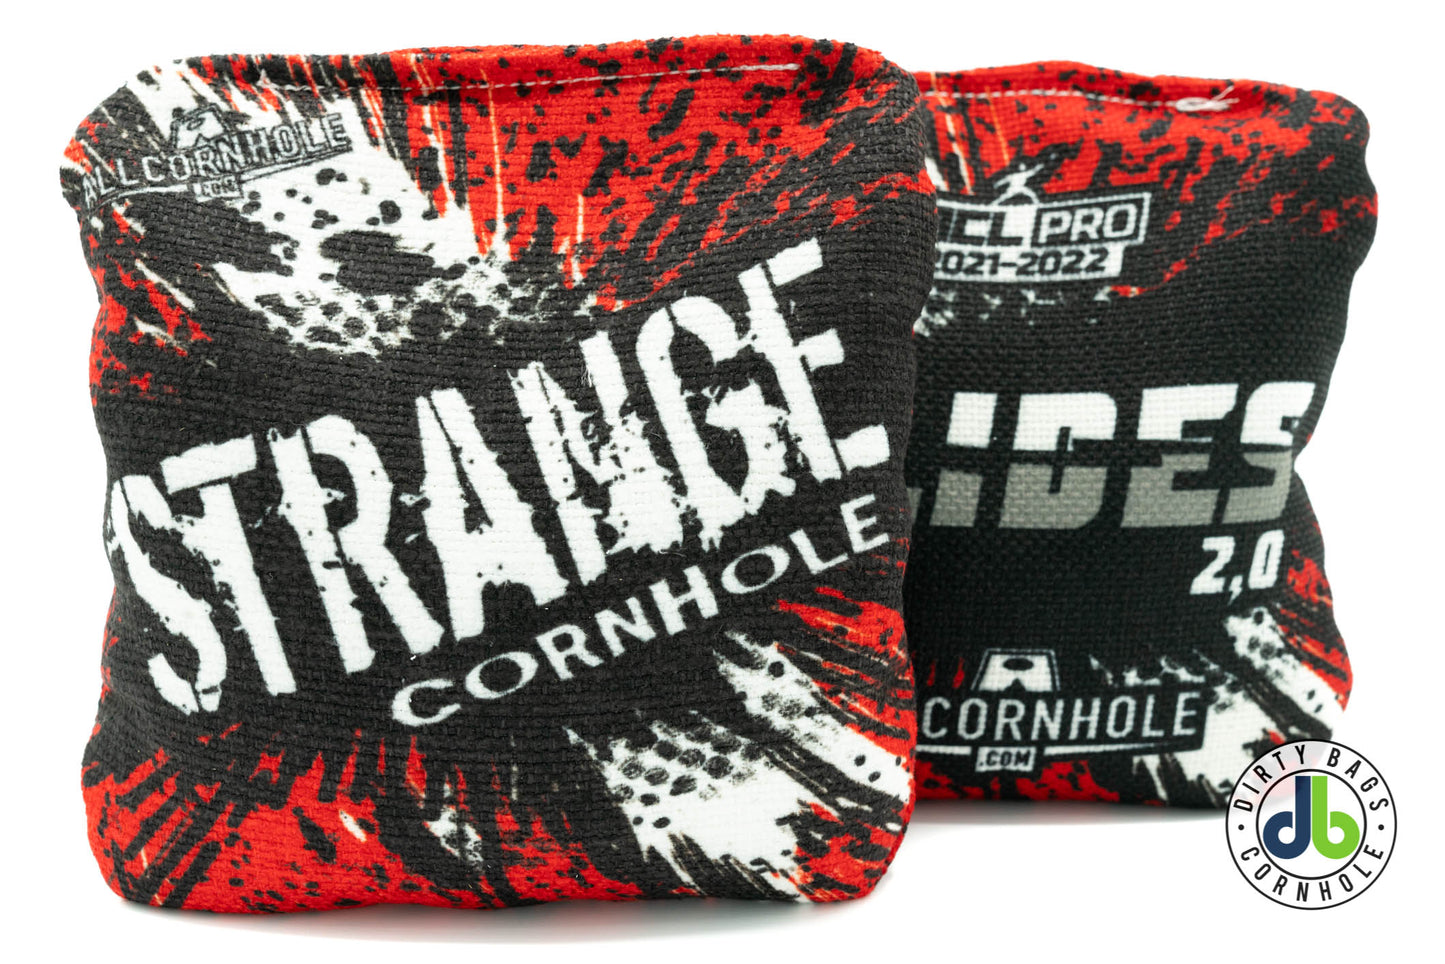 All-Slides 2.0 - Strange Cornhole Blast Edition (Set - 4 Bags)